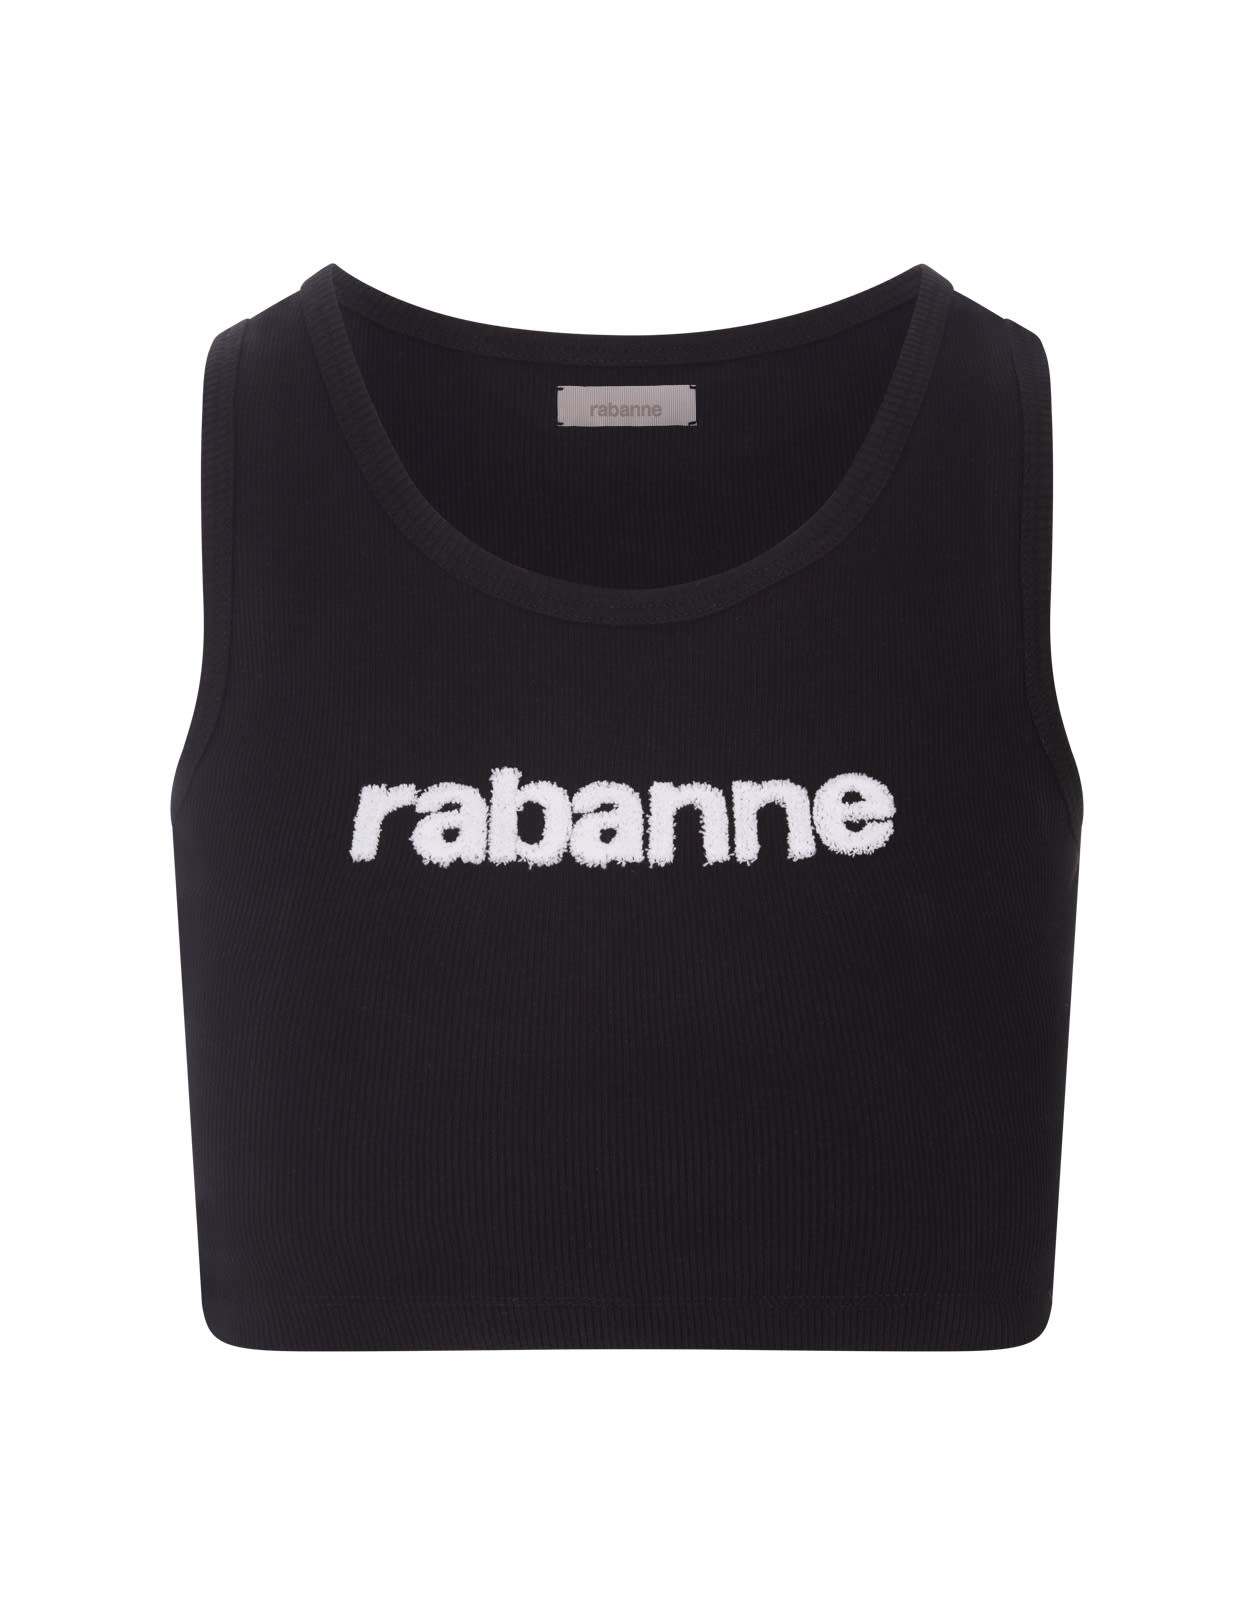 Shop Rabanne Black Crop Top With White Logo